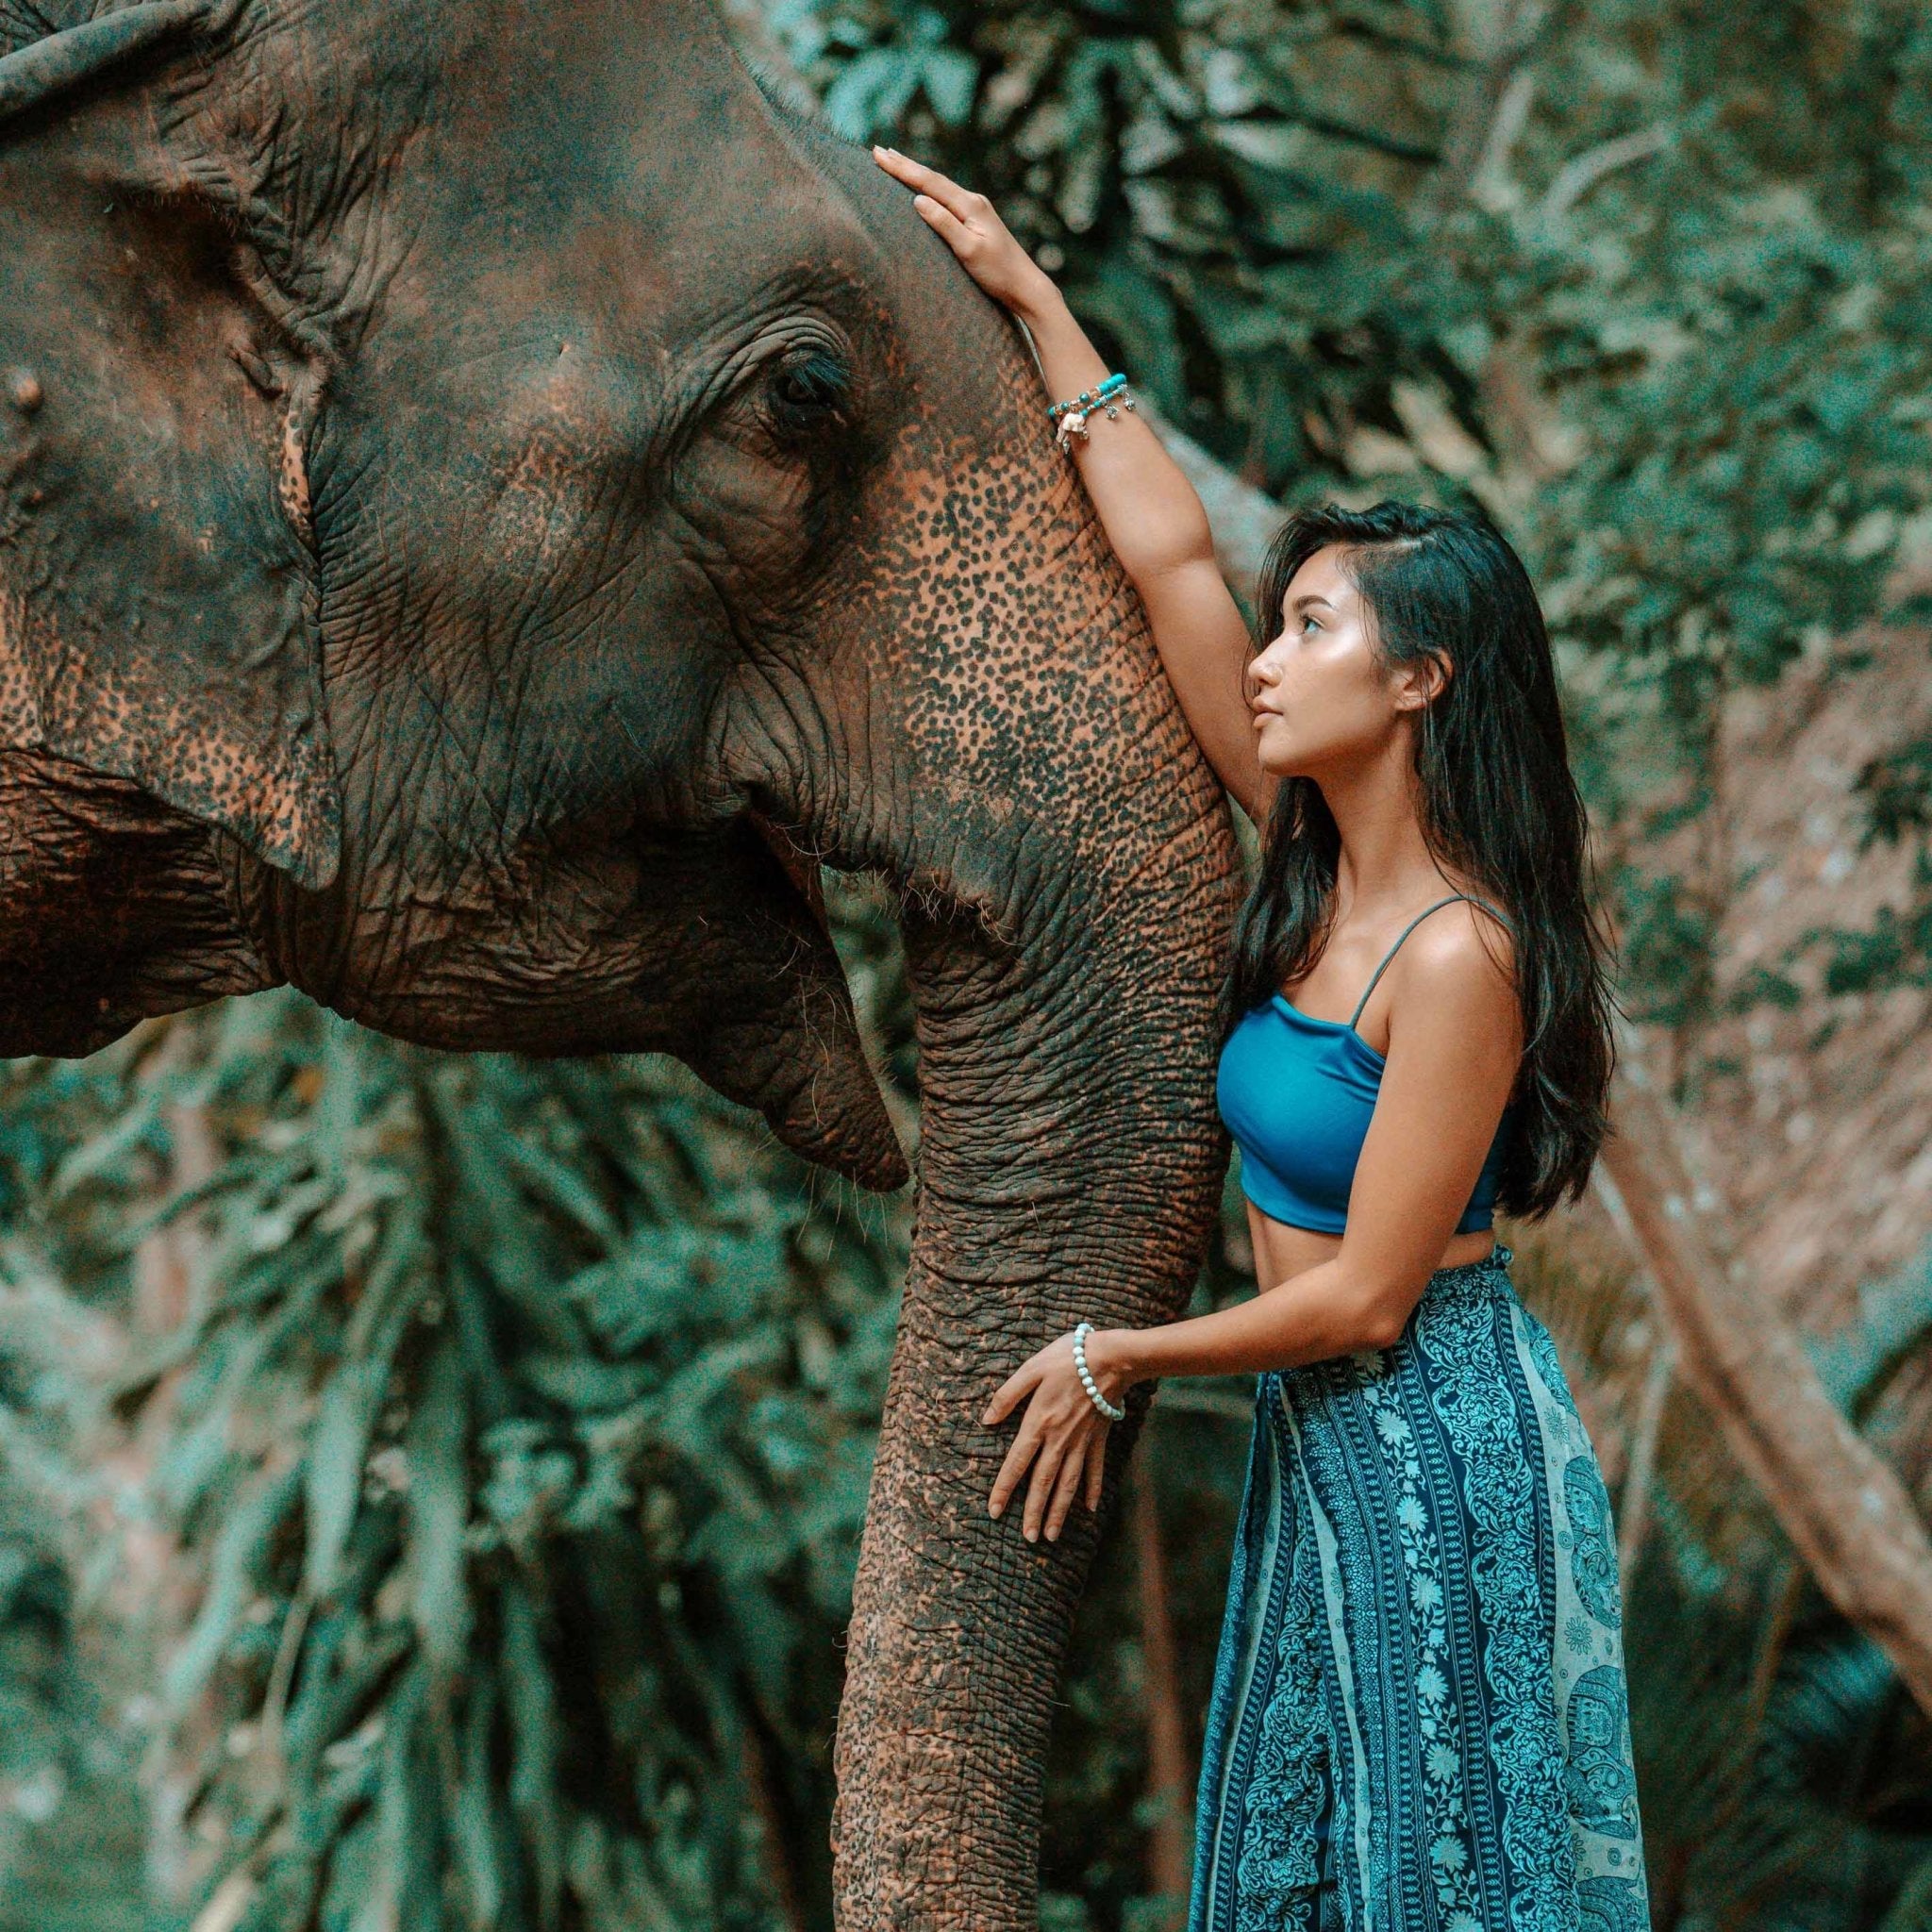 BALI PALAZZO Elepanta Palazzo Pants - Buy Today Elephant Pants Jewelry And Bohemian Clothes Handmade In Thailand Help To Save The Elephants FairTrade And Vegan